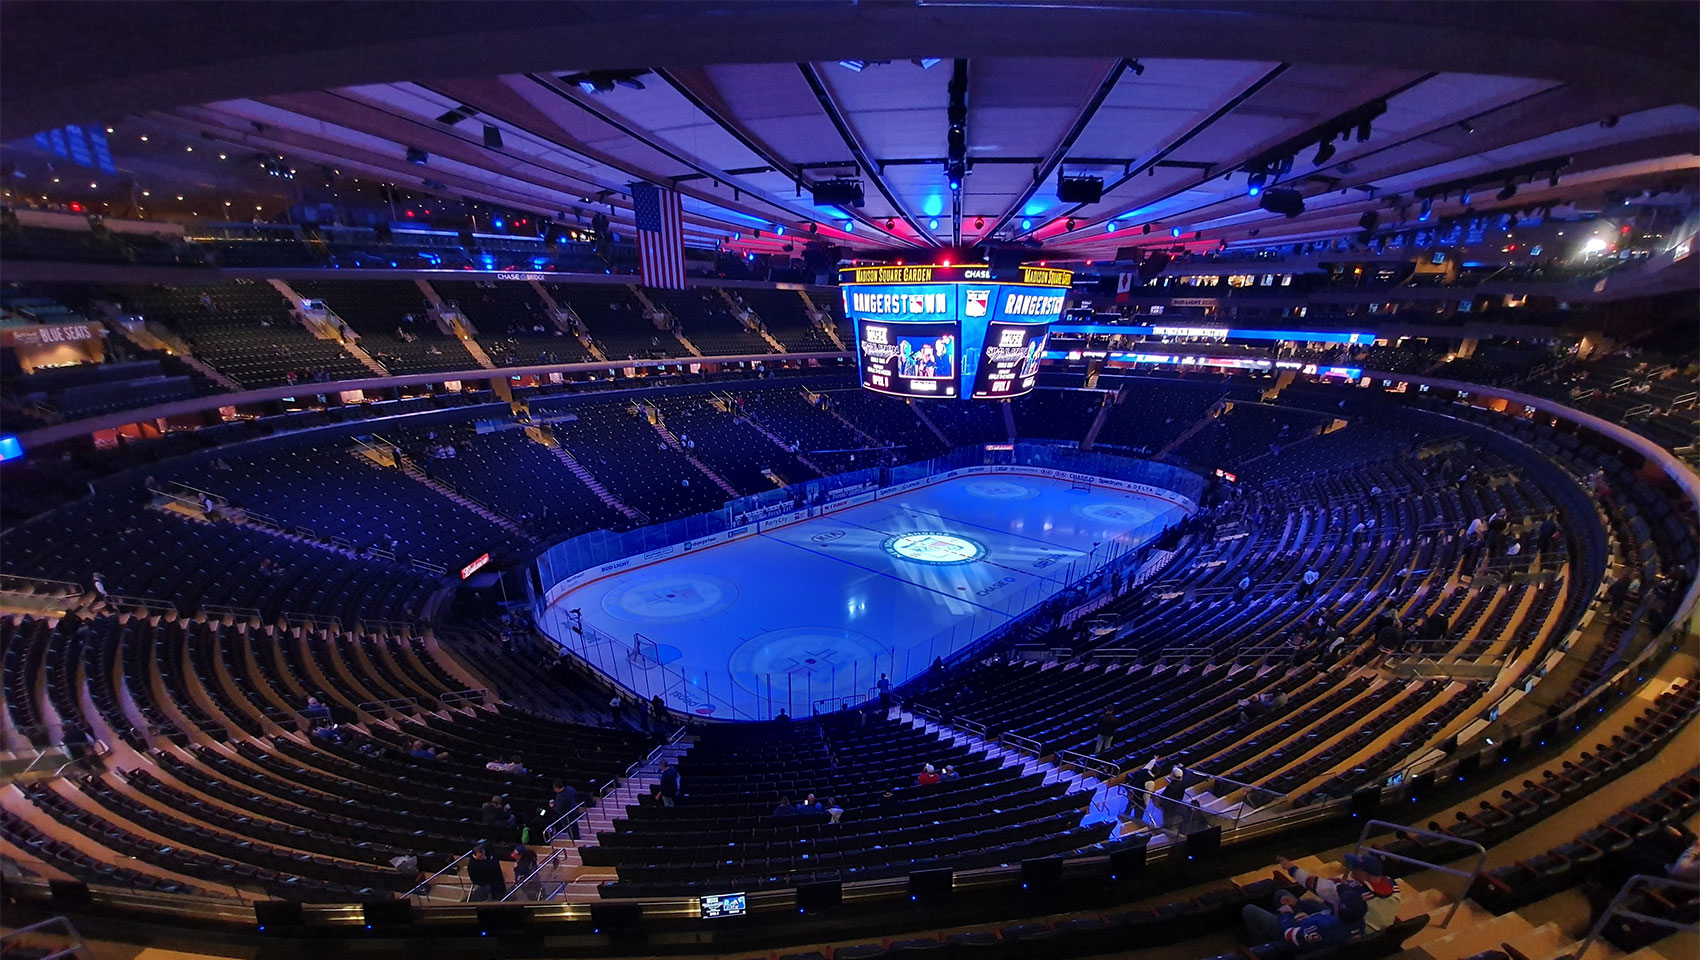 Madison Sqaure Garden set up for NY Rangers ice hockey